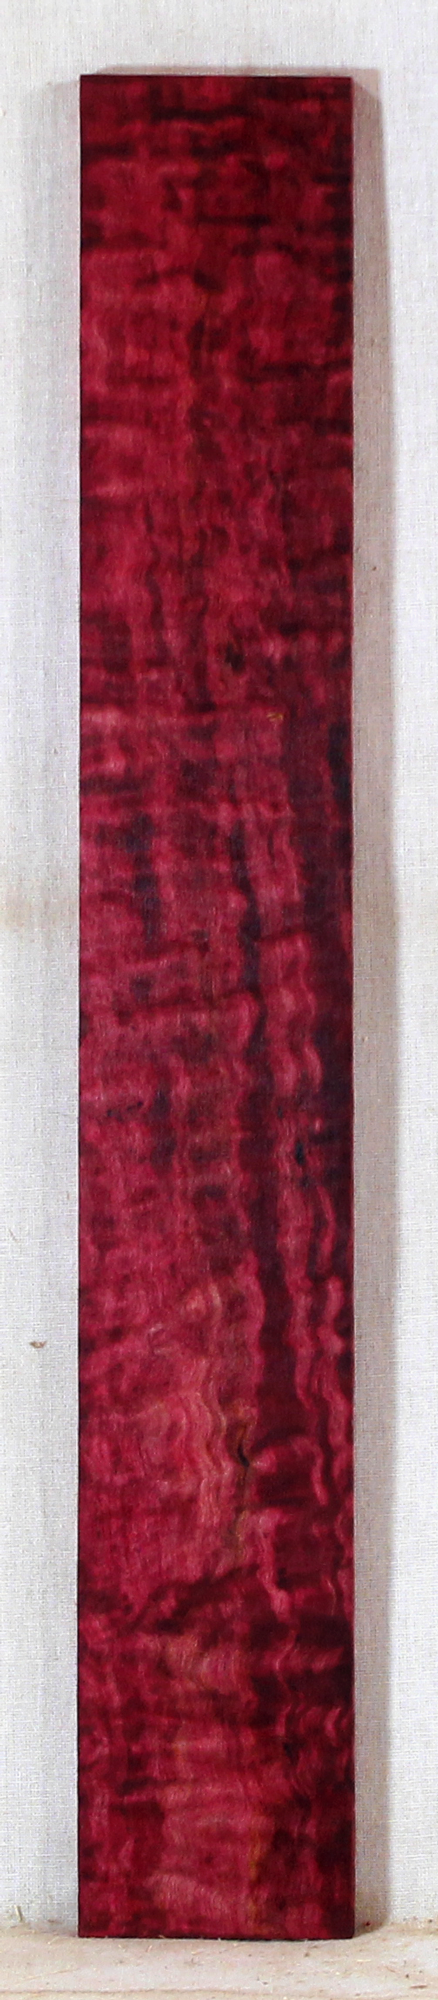 Maple Ukulele Red Fingerboard Stabilized (EH66)